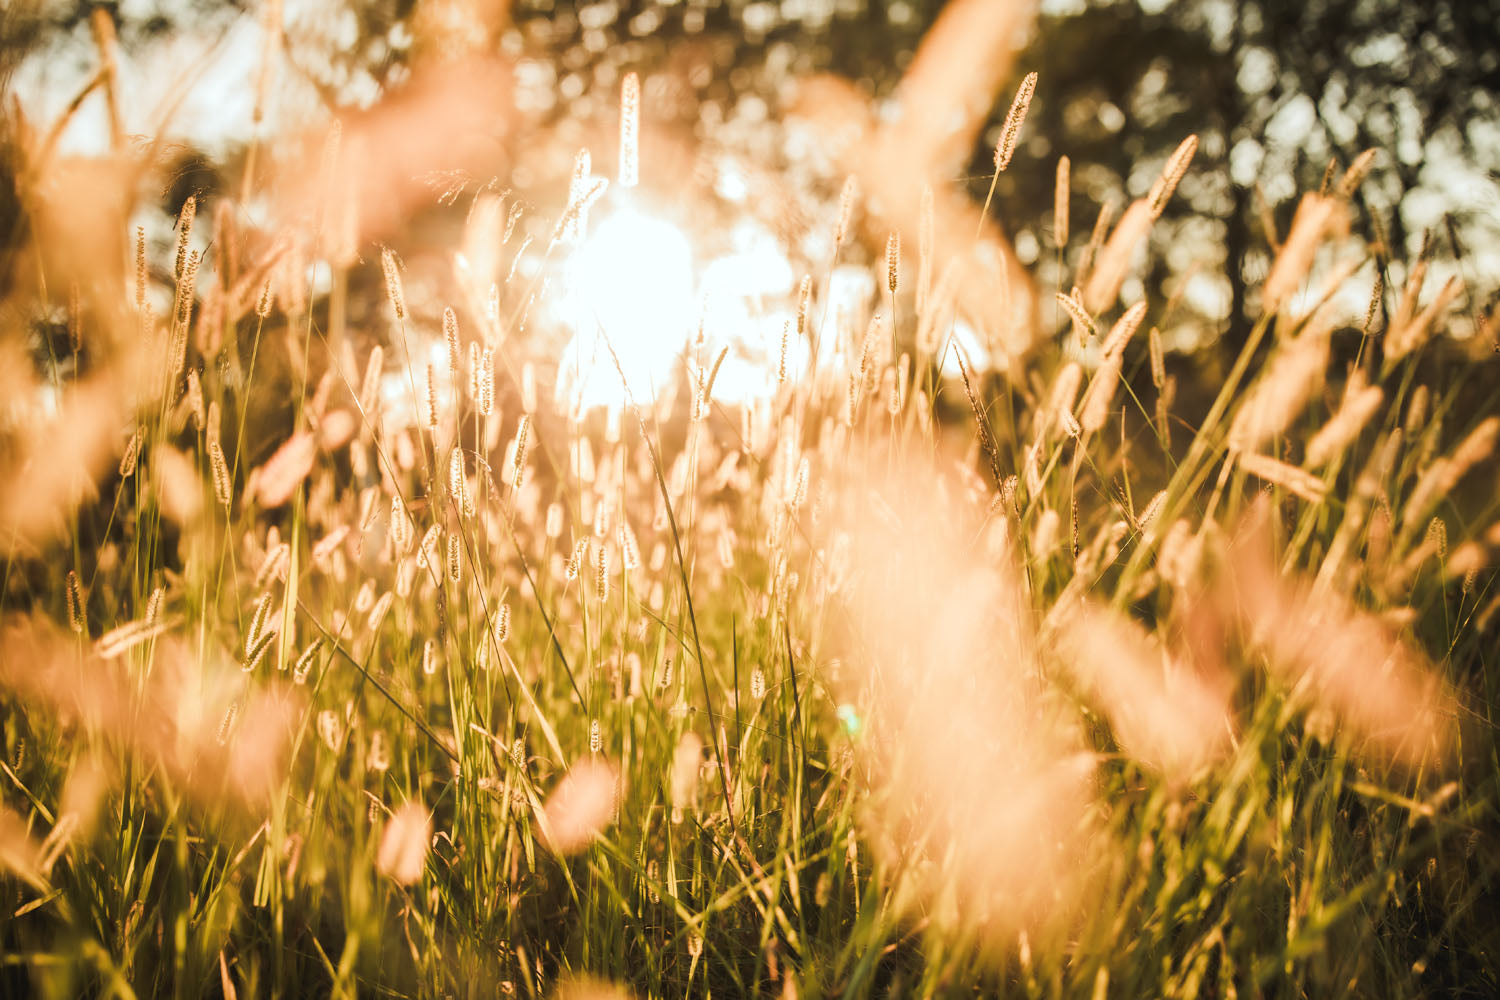 Close up photo of Nebraska grass on a warm summer night during golden hour.